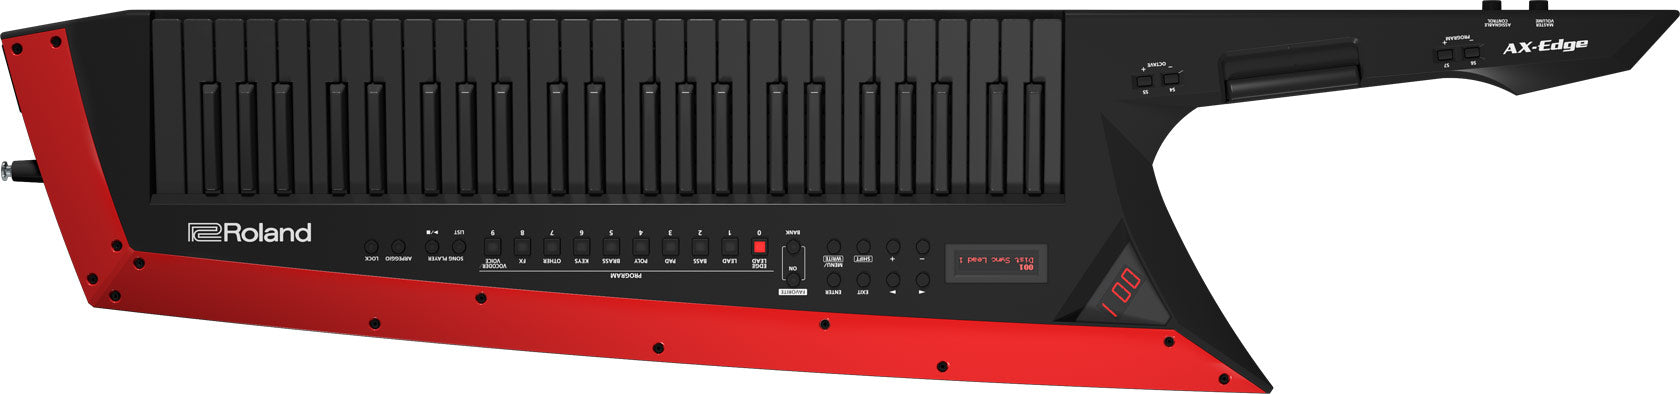 Roland AX-Edge 49-Key Keytar - Black - New,Black